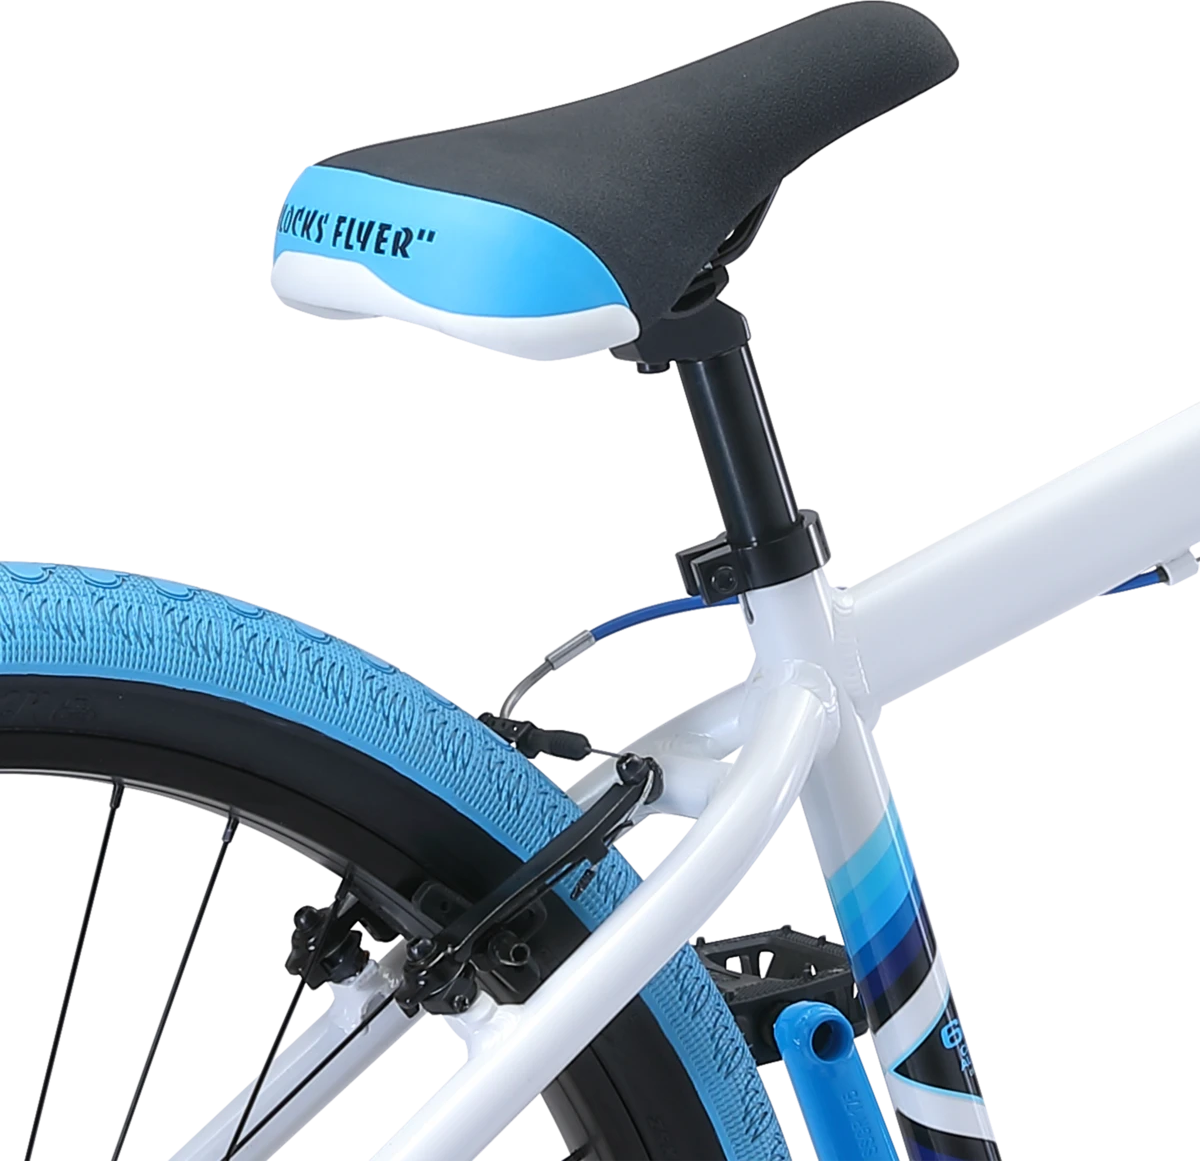 SE Bikes Blocks Flyer 26 Bike-Blue – J&R Bicycles, Inc.